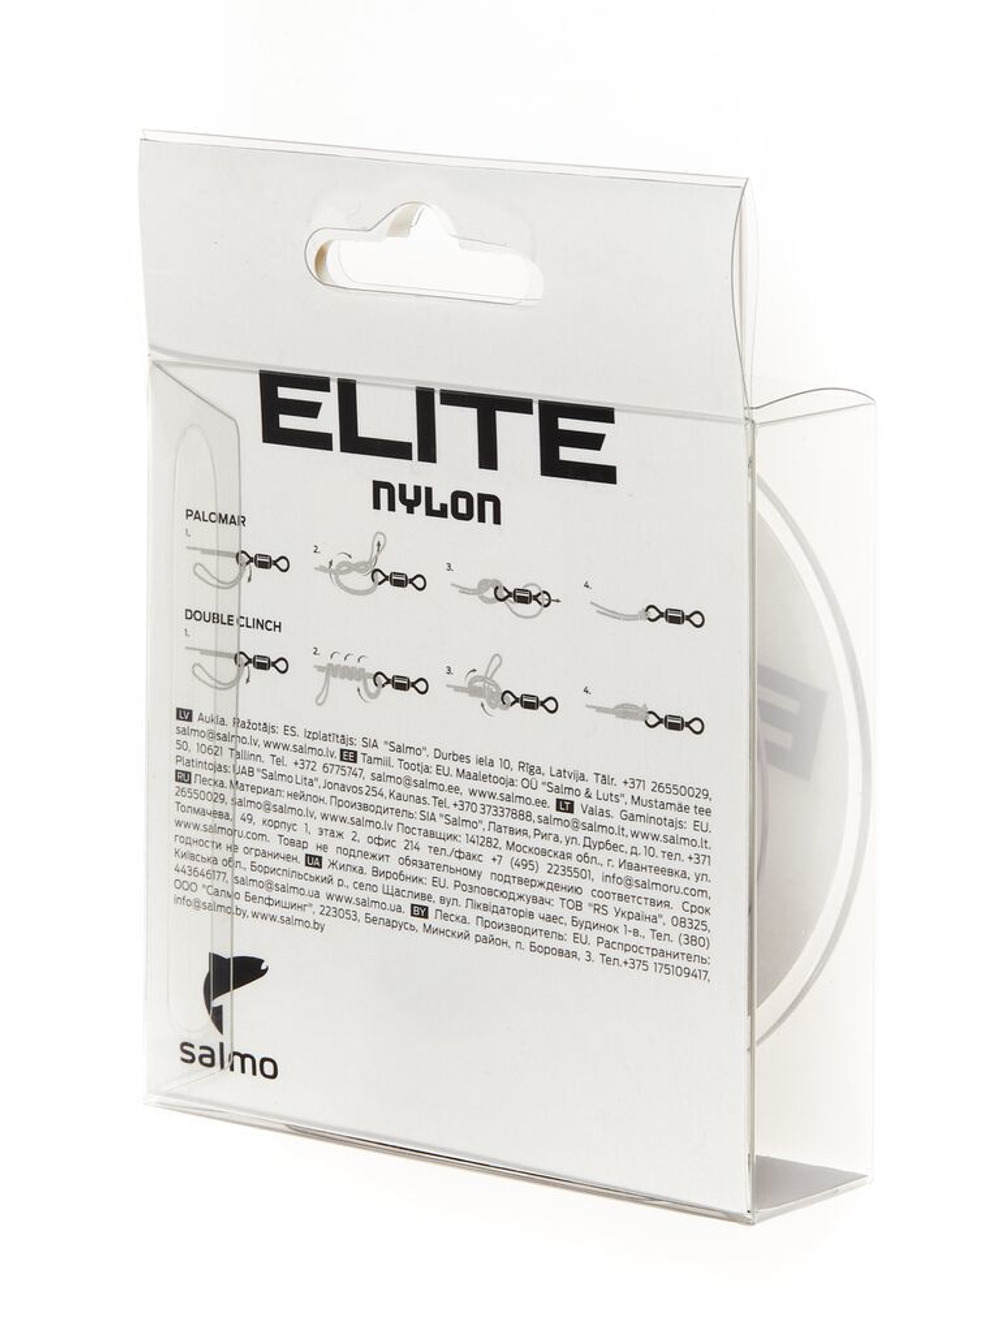 Леска монофильная SALMO Elite Fluoro Coated Nylon, 100 м, 0,30 мм, прозрачная